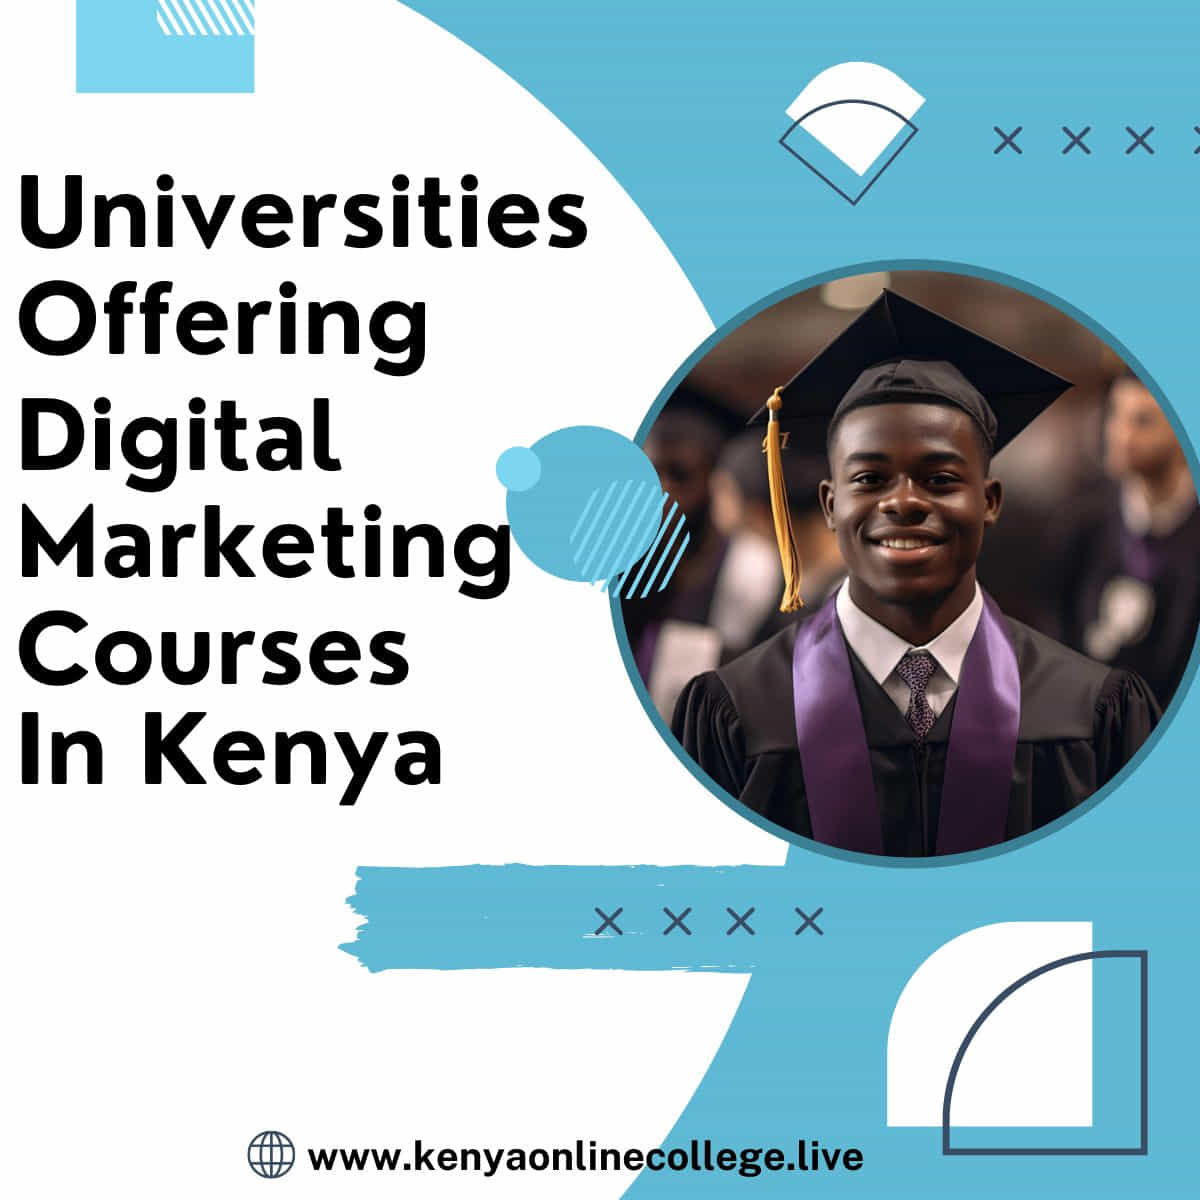 Universities offering digital marketing courses in Kenya